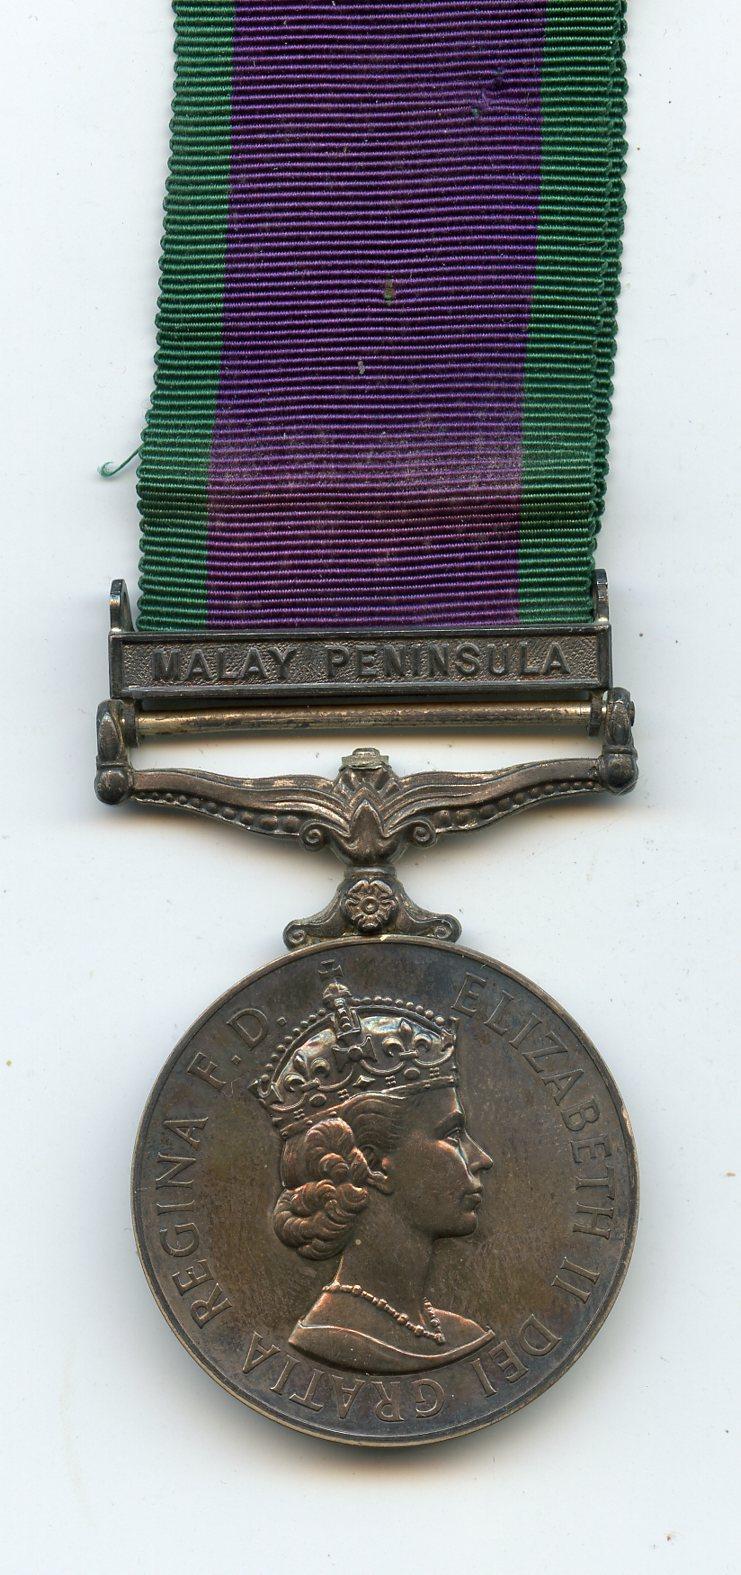 Campaign Service Medal 1962 To J.S.1. M J Lake, Royal Navy